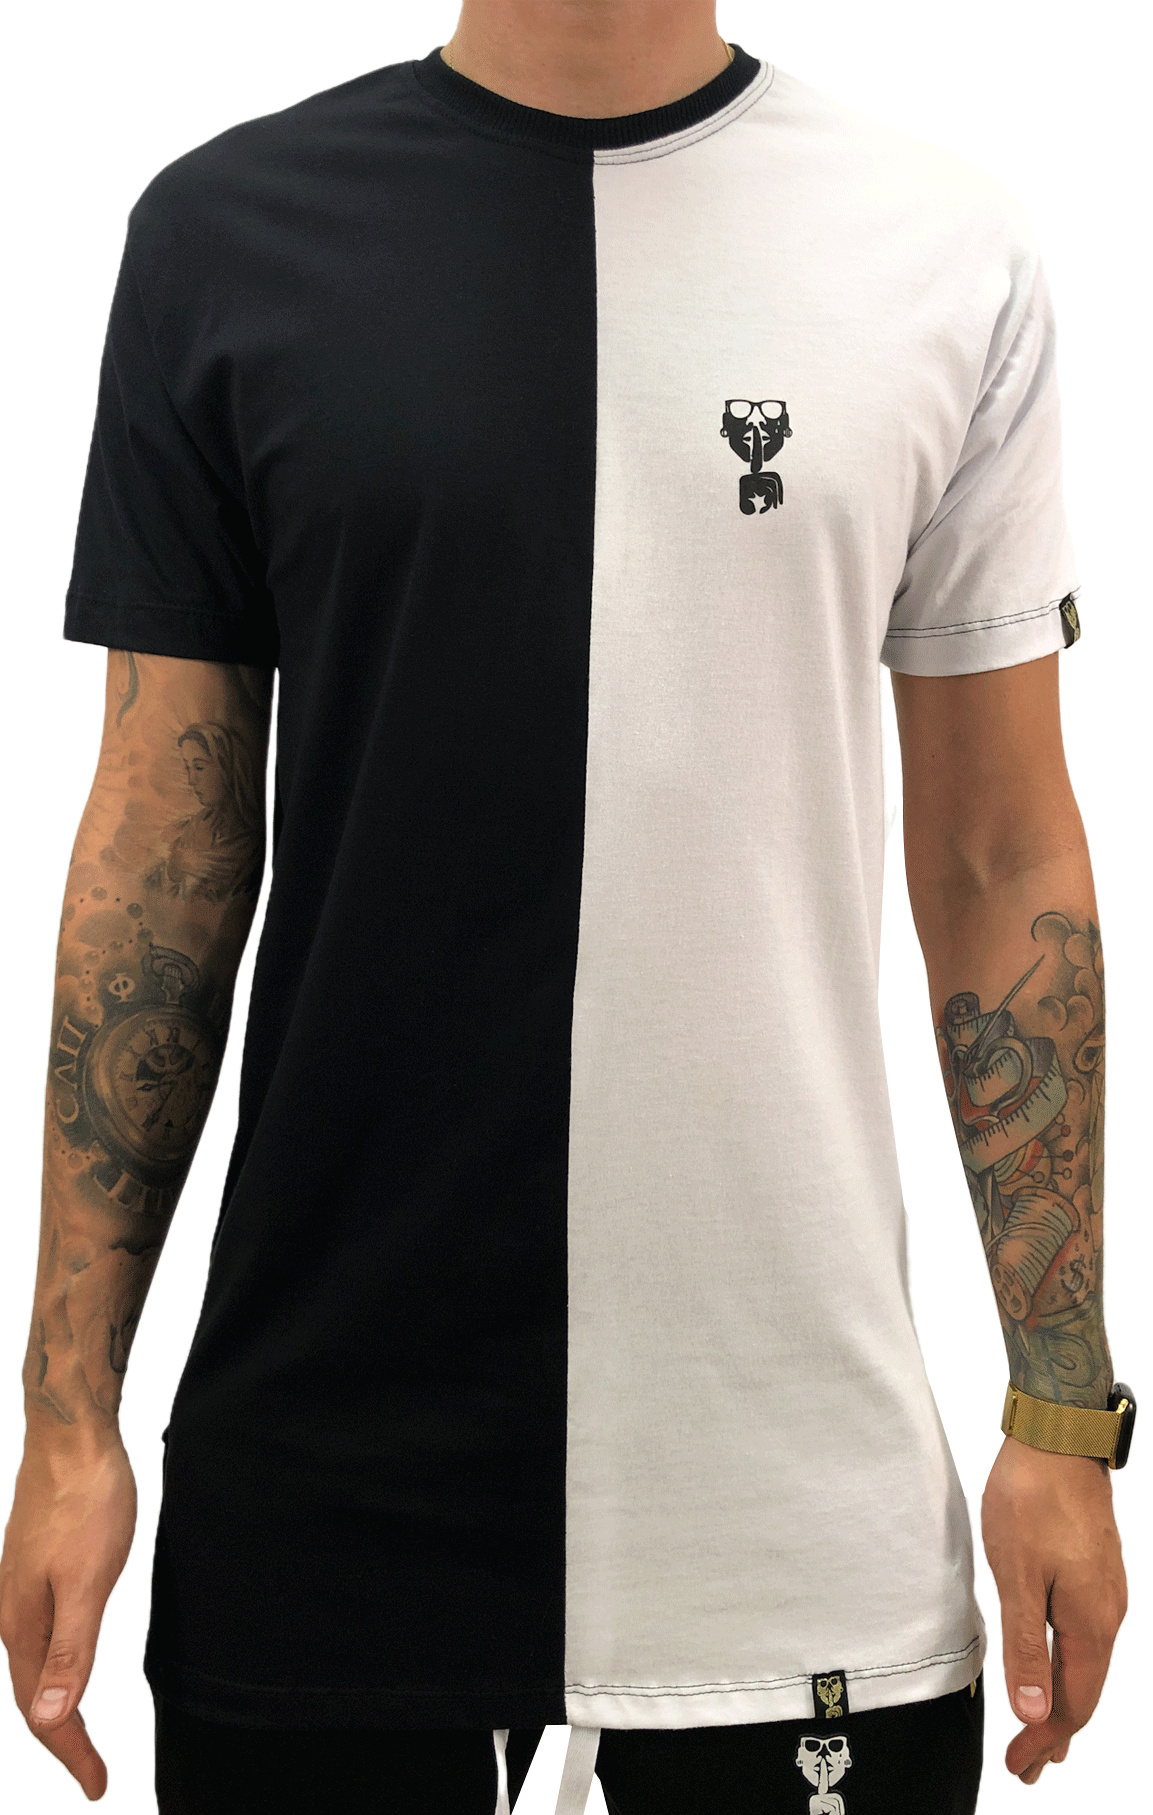 Camiseta longline black white